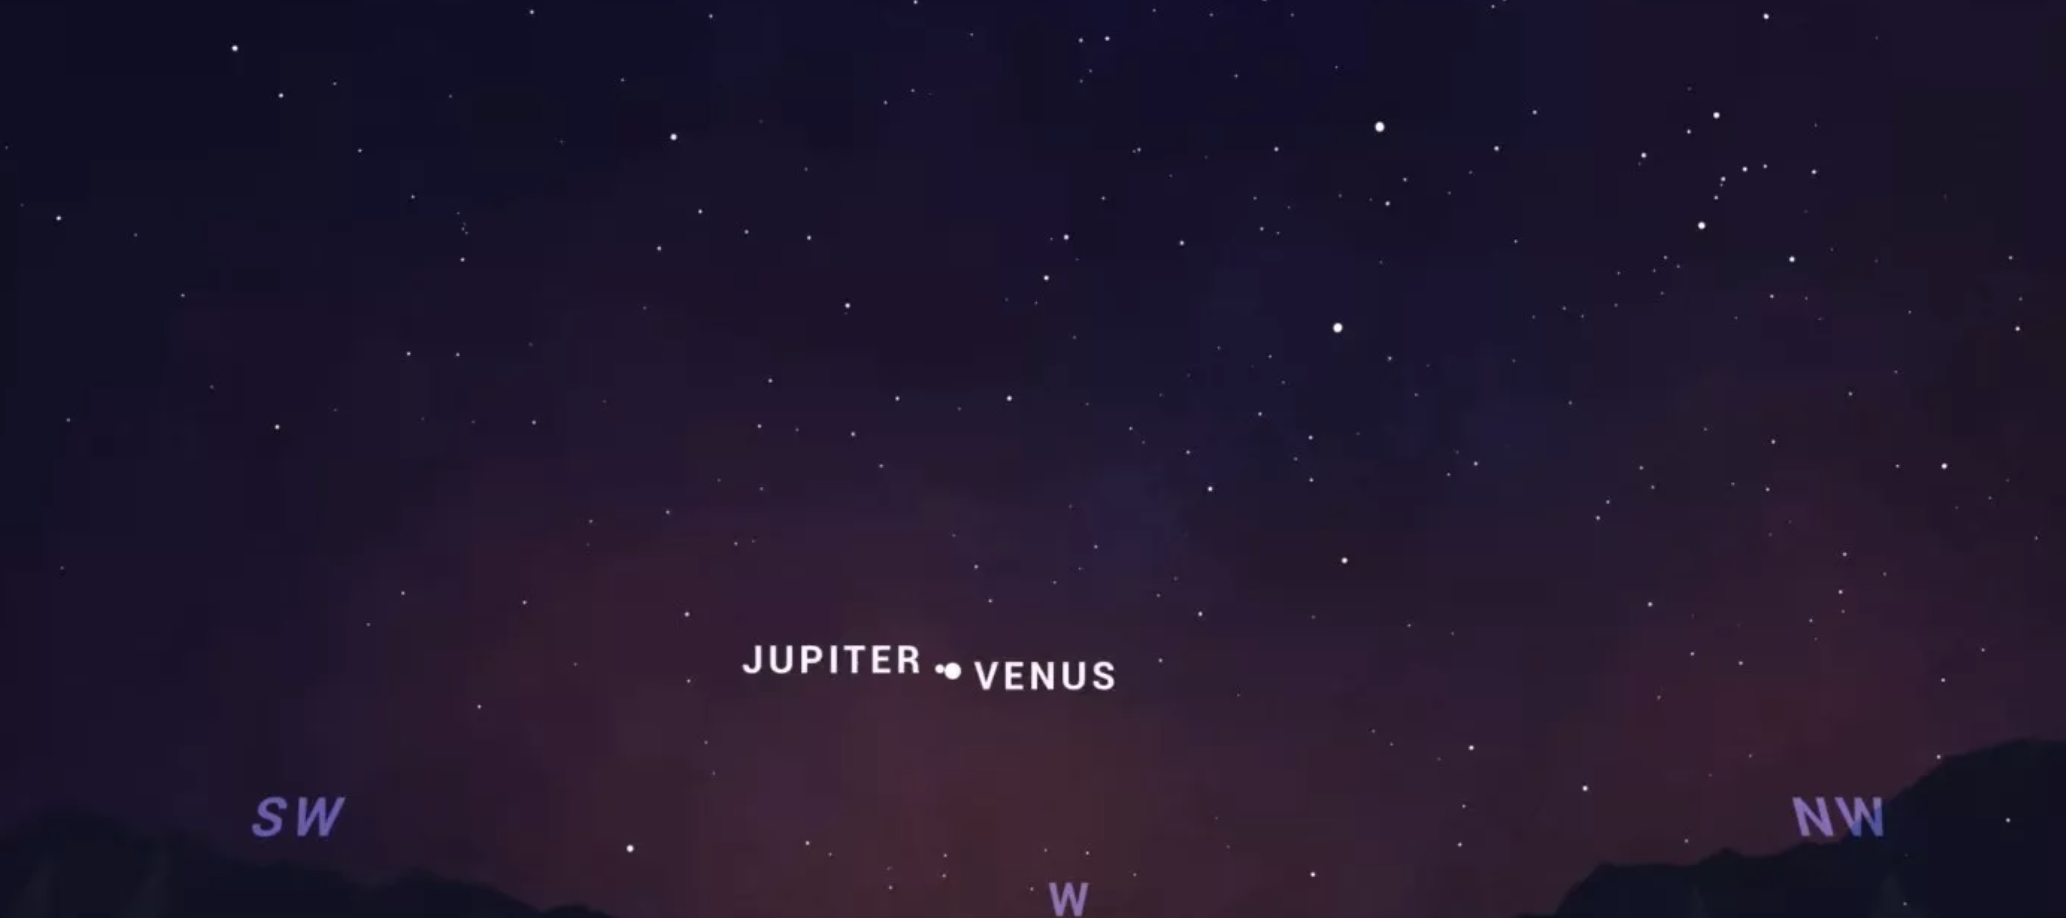 venus in the night sky